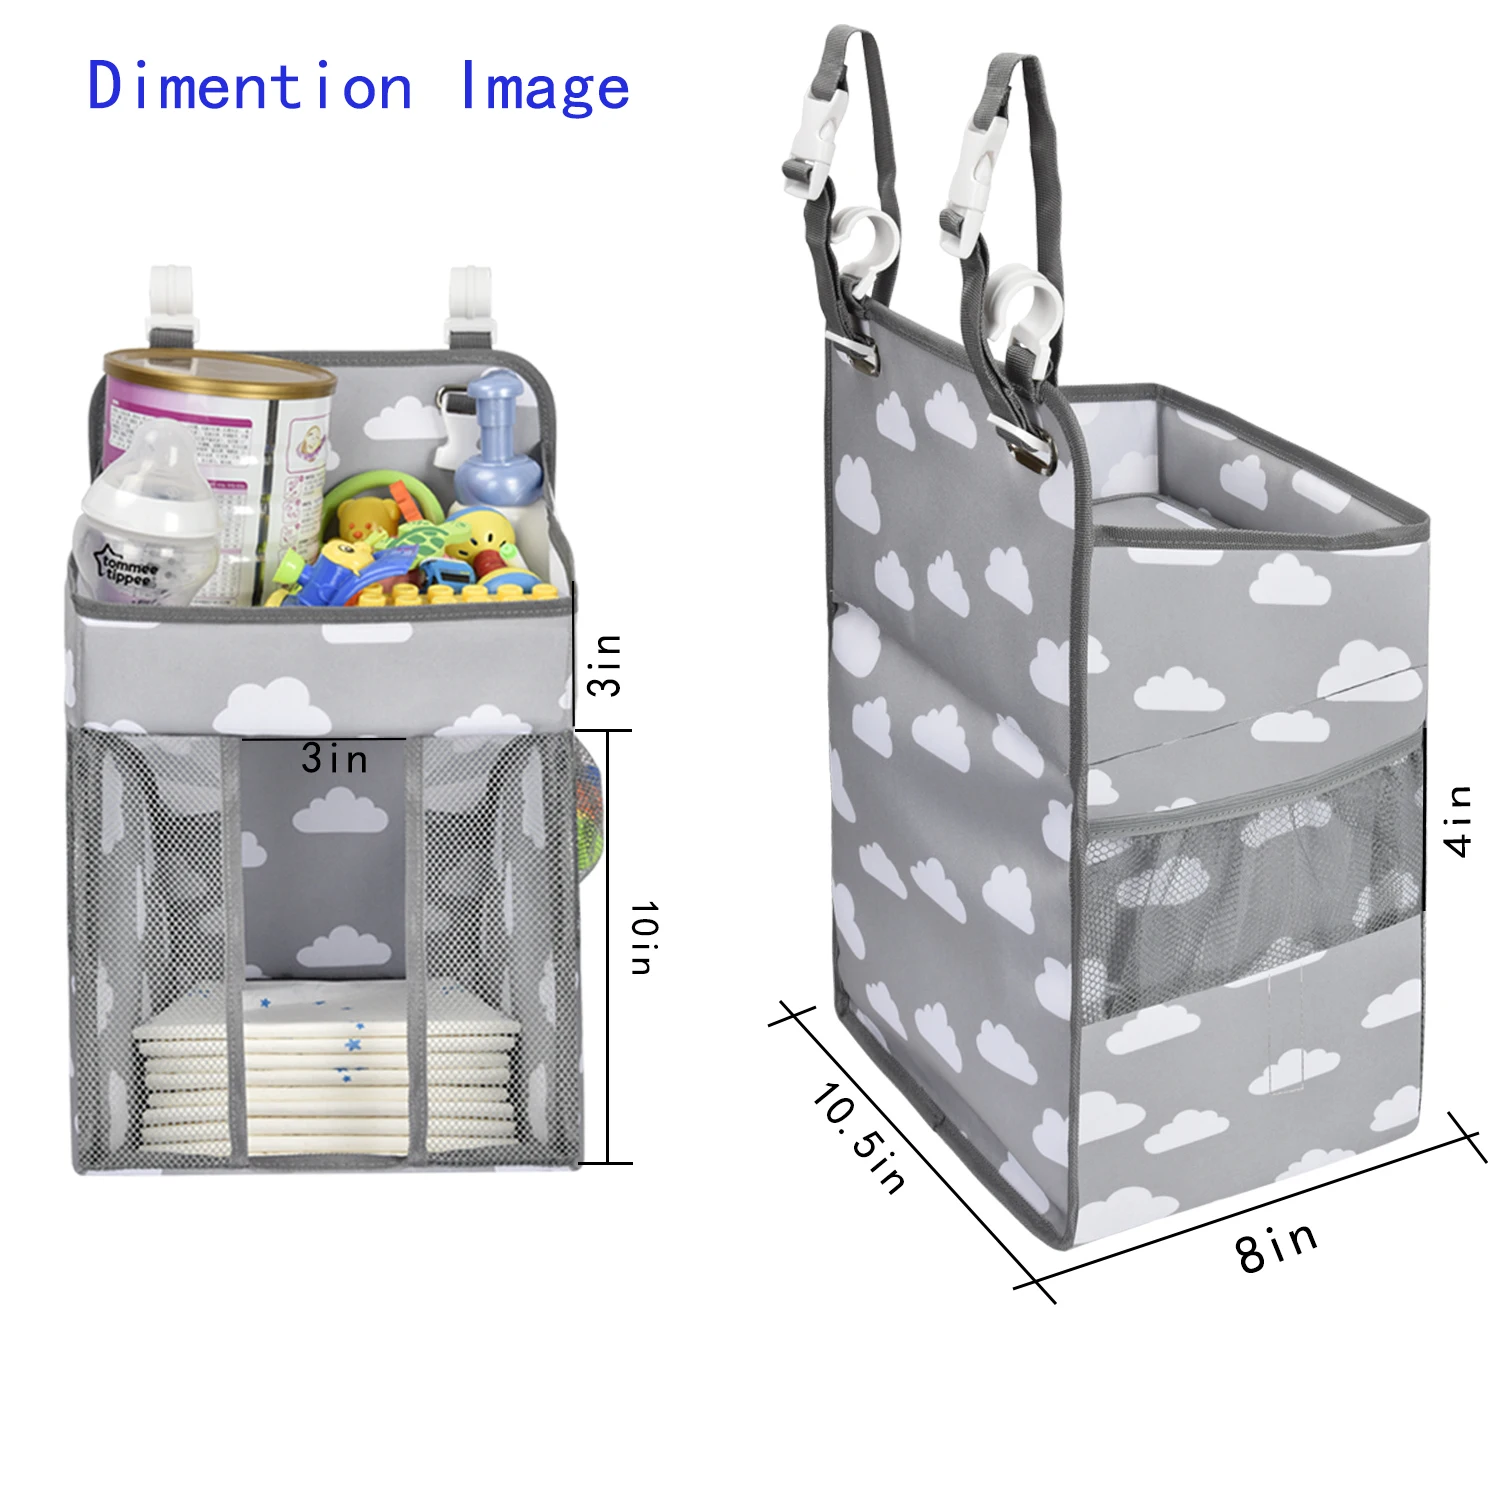 

Amazon Hot Style Baby diaper caddy Changing Table Crib Playard Wall & Nursery Organization Hanging Diaper Caddy Organizer